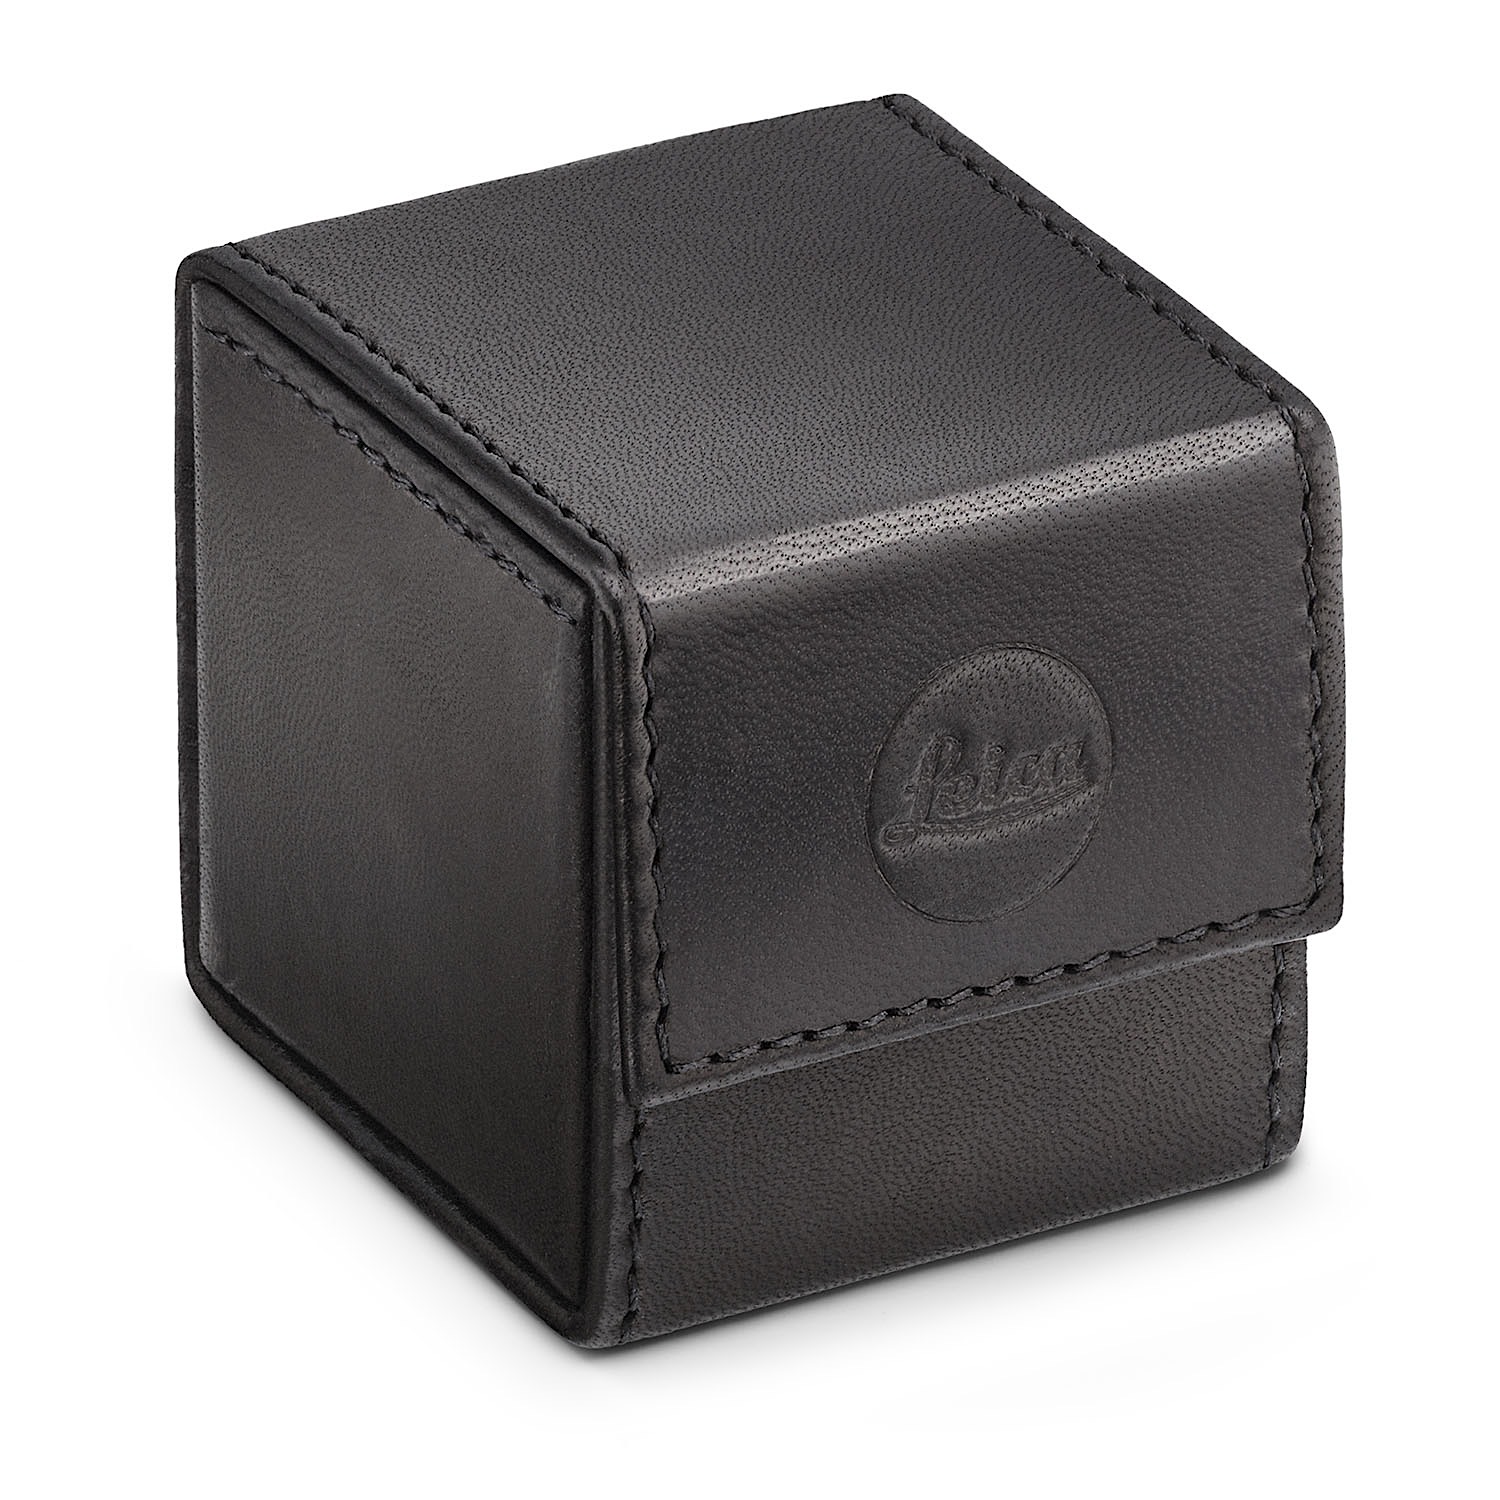 Leica Visoflex 2 Case, Leather, Black